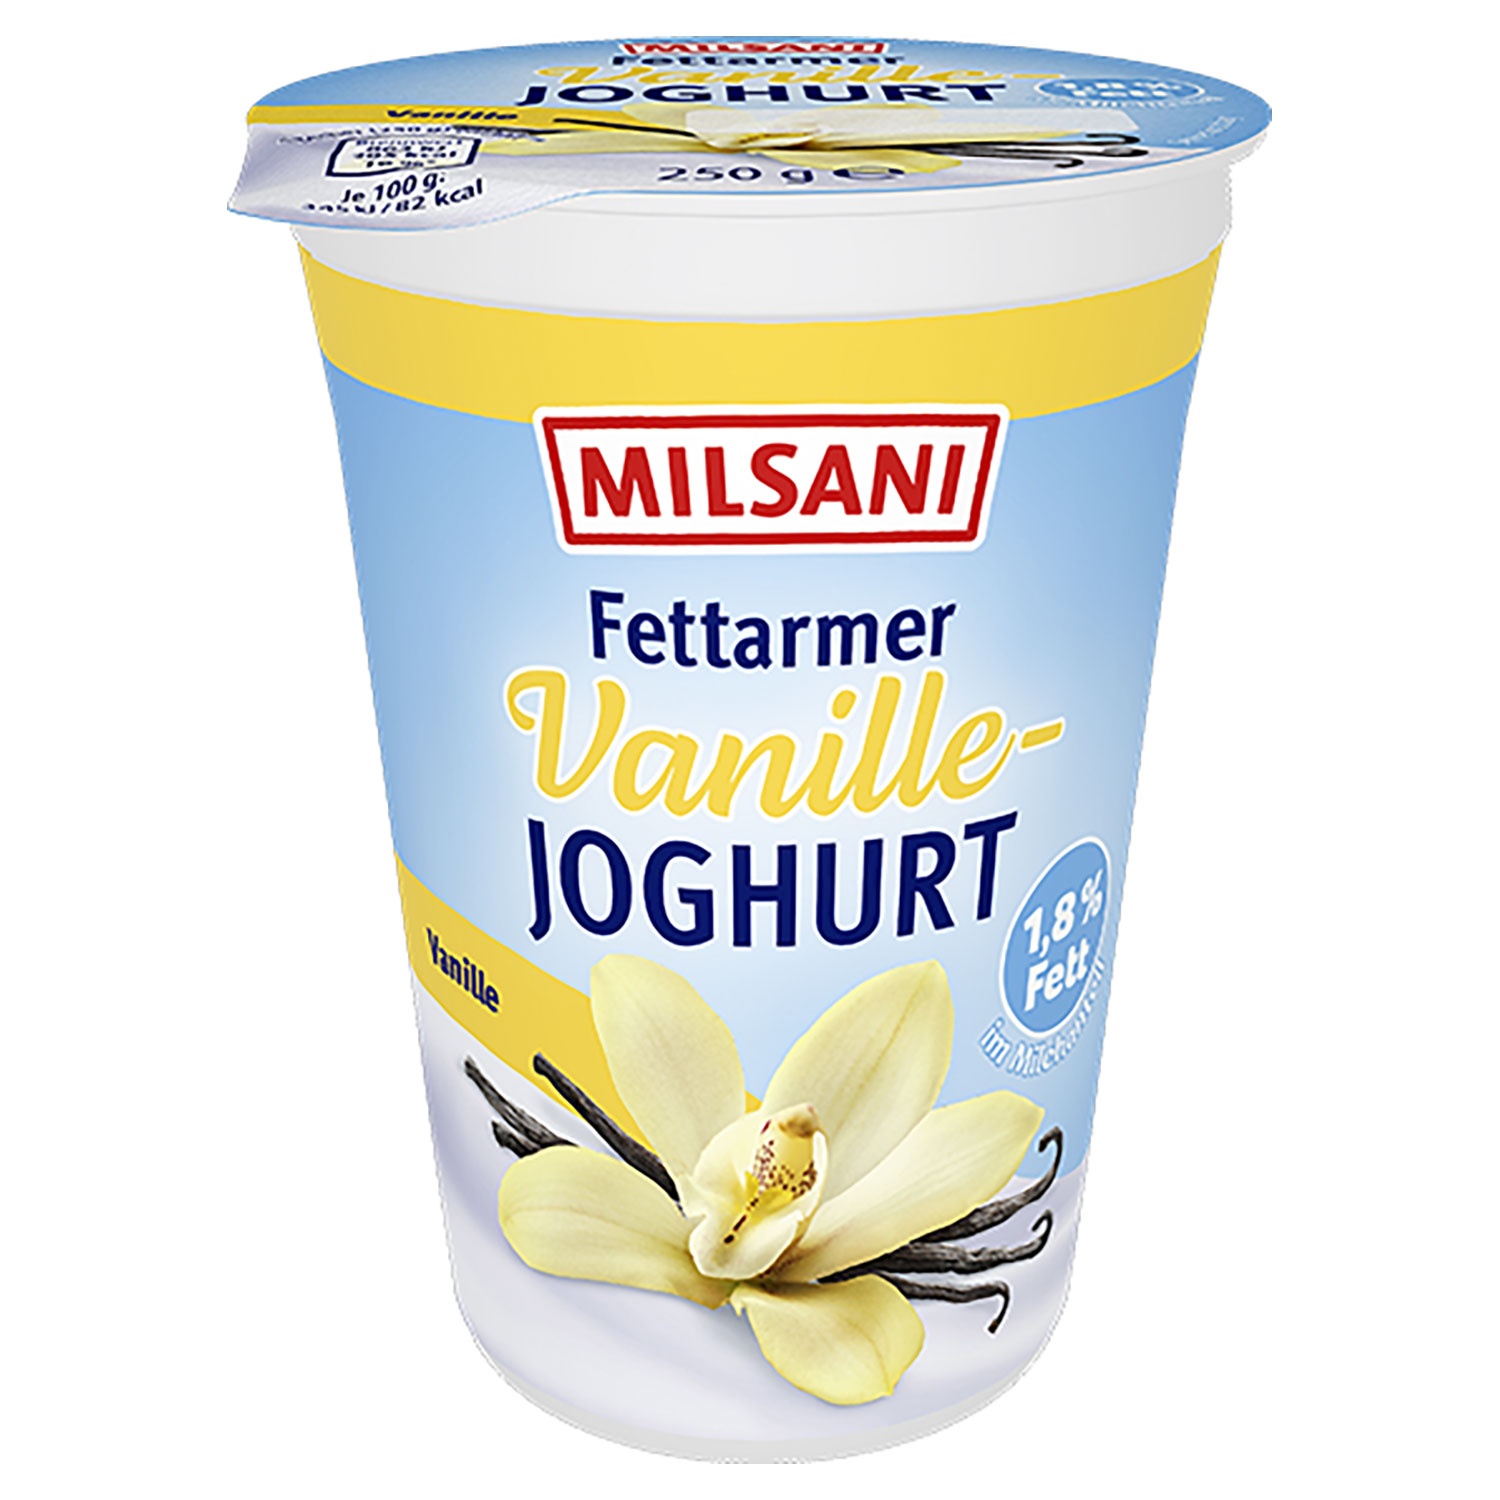 MILSANI Fettarmer Joghurt 250 g, Vanille